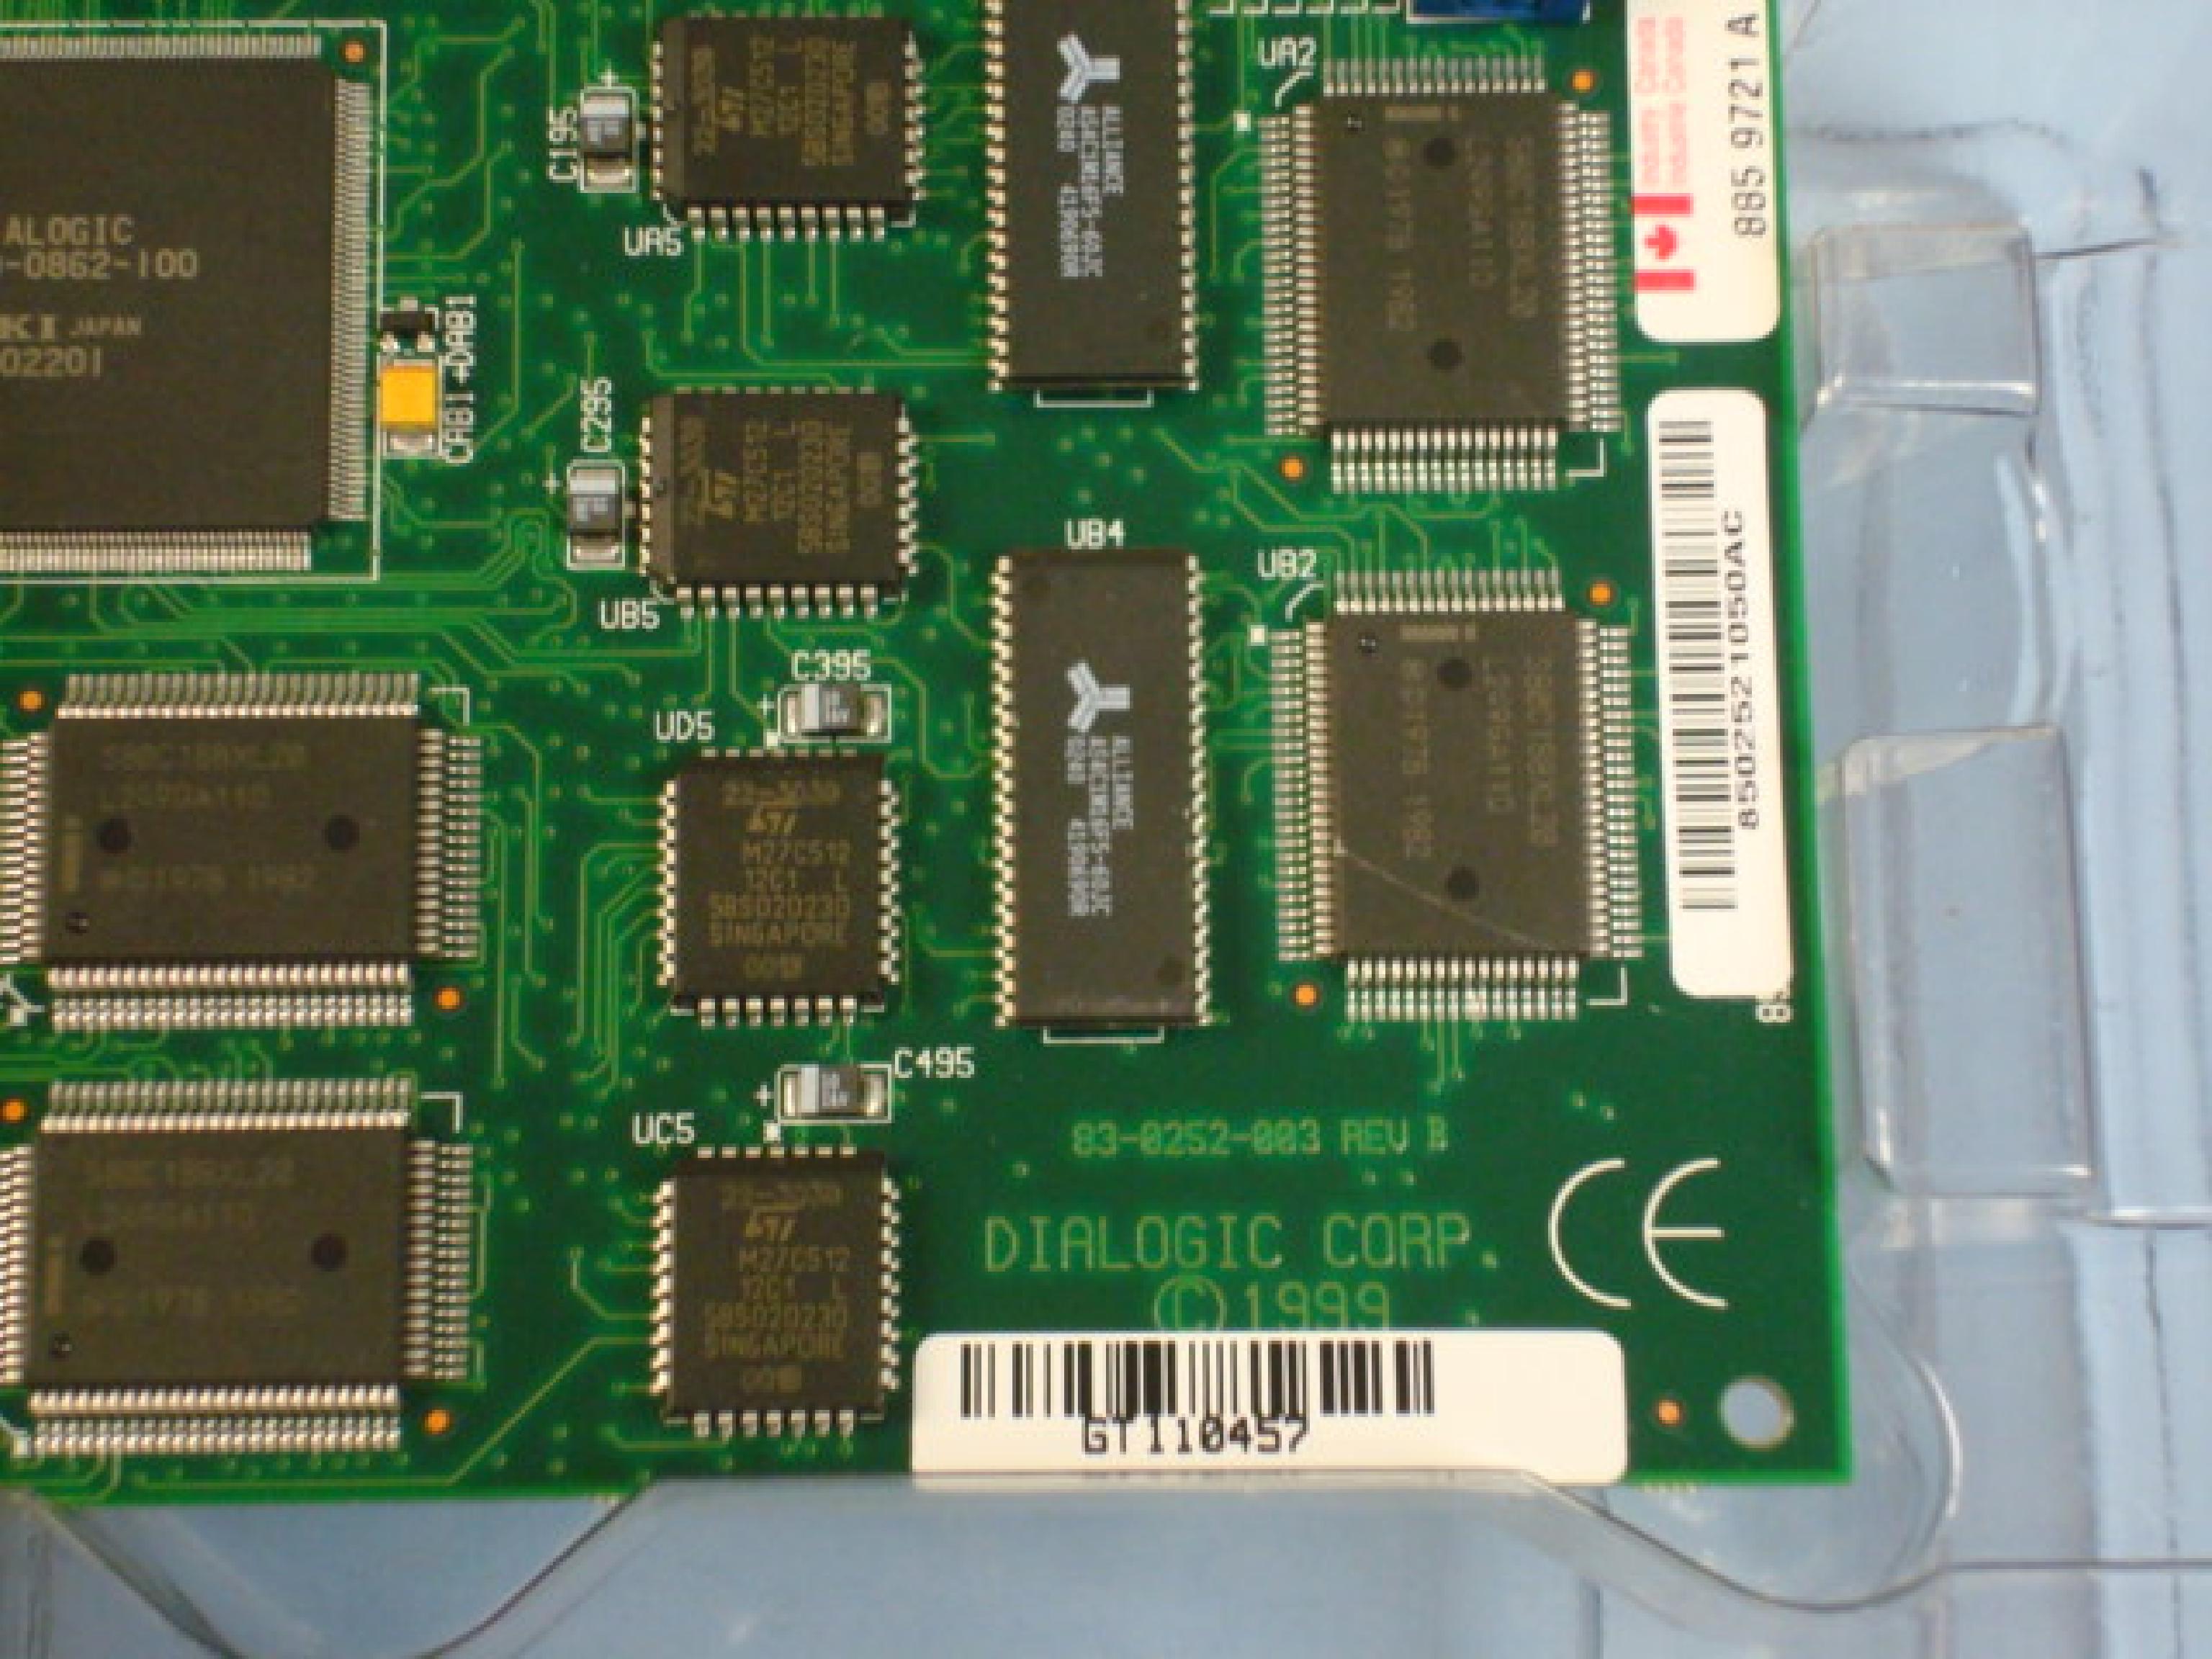 DIALOGIC 99-3405-005 OPEN BOX GAMMALINK FAX PCI CPI/400